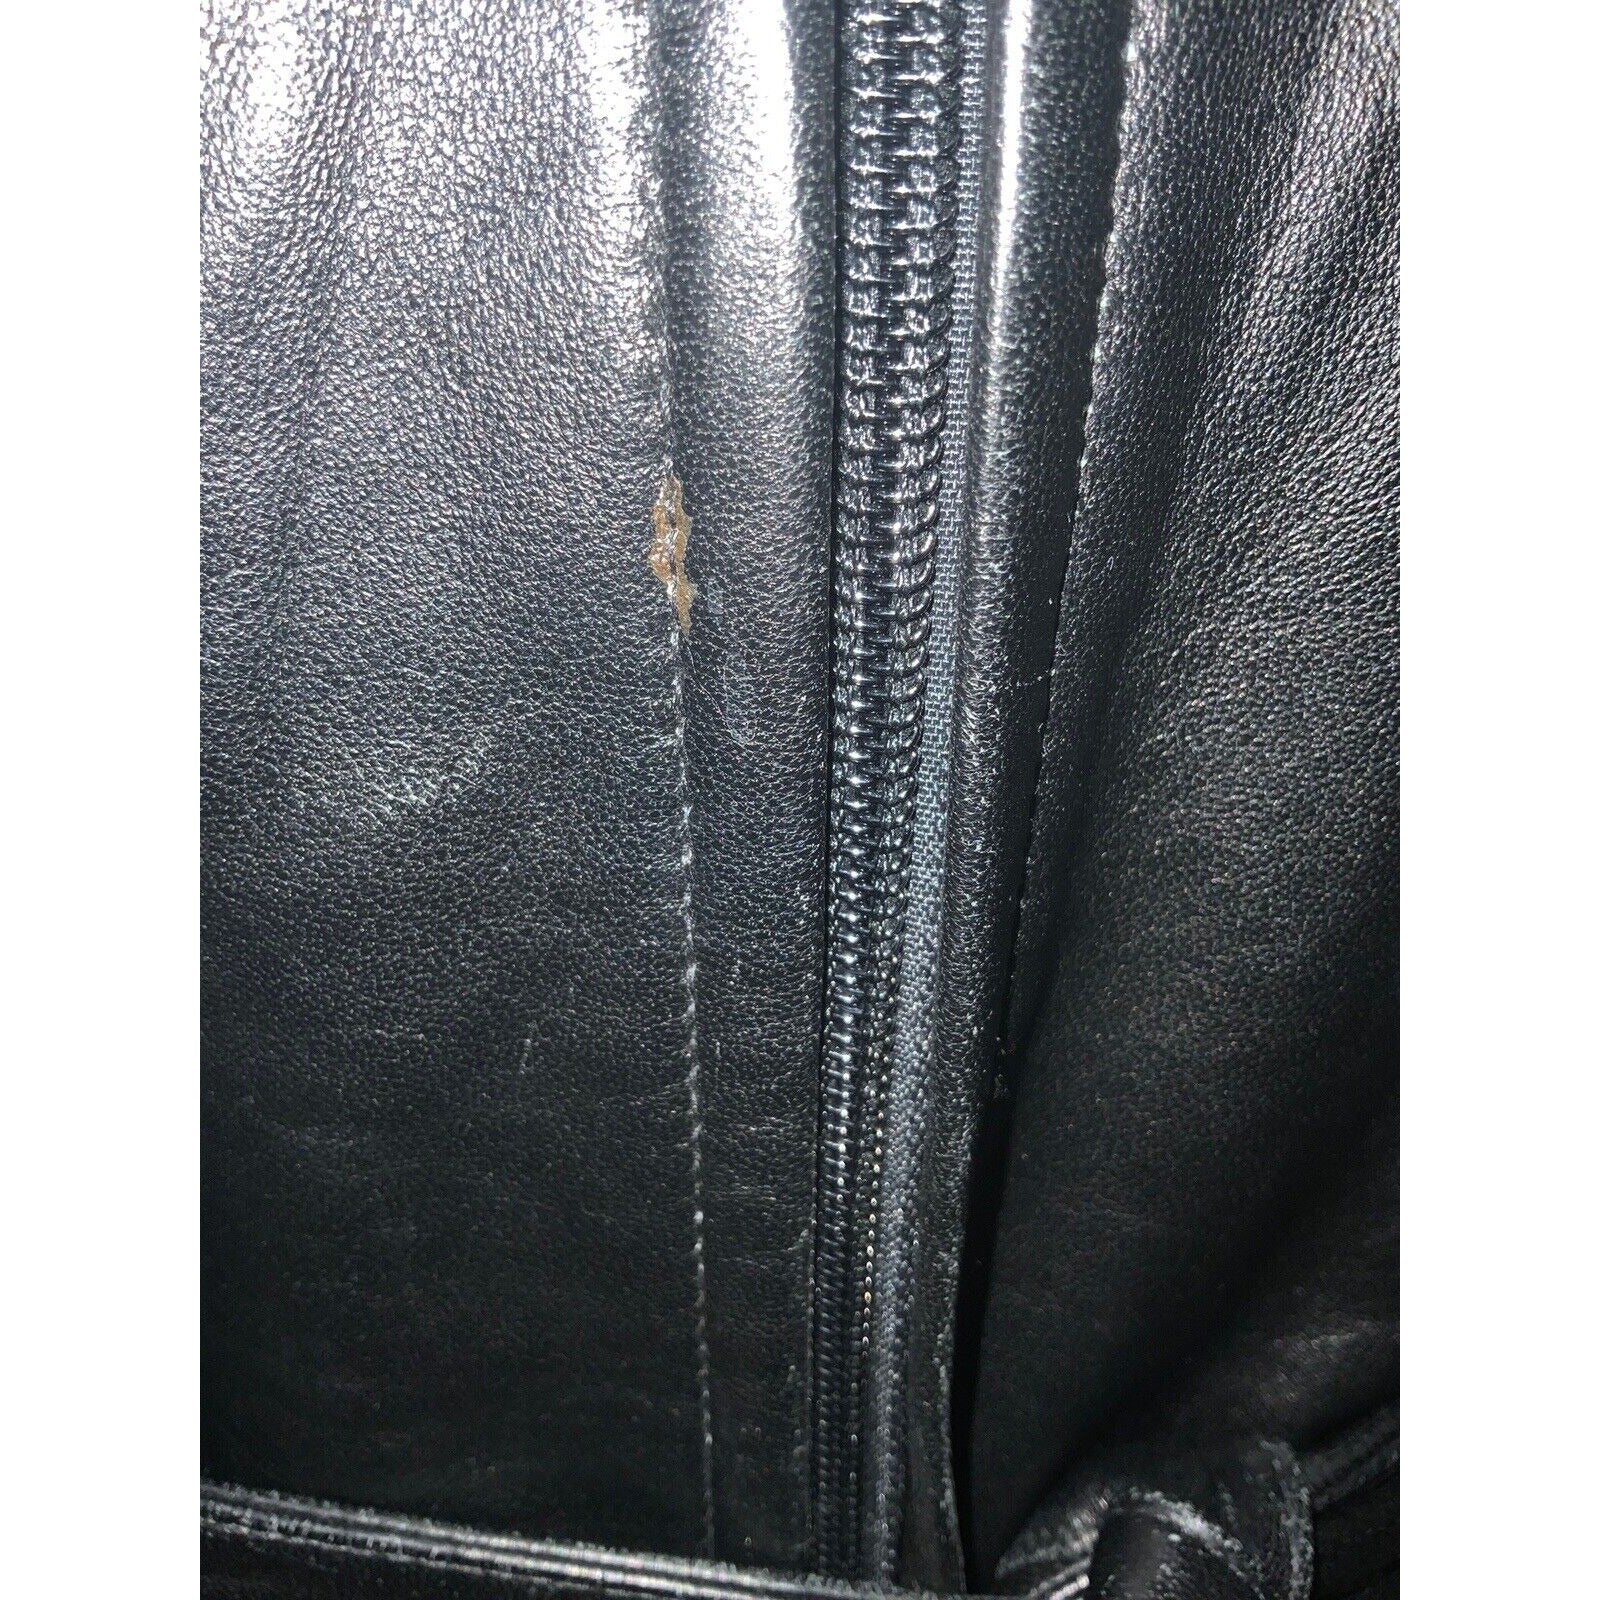 Closeup Of Scuff Mark Next To Jacket Zipper